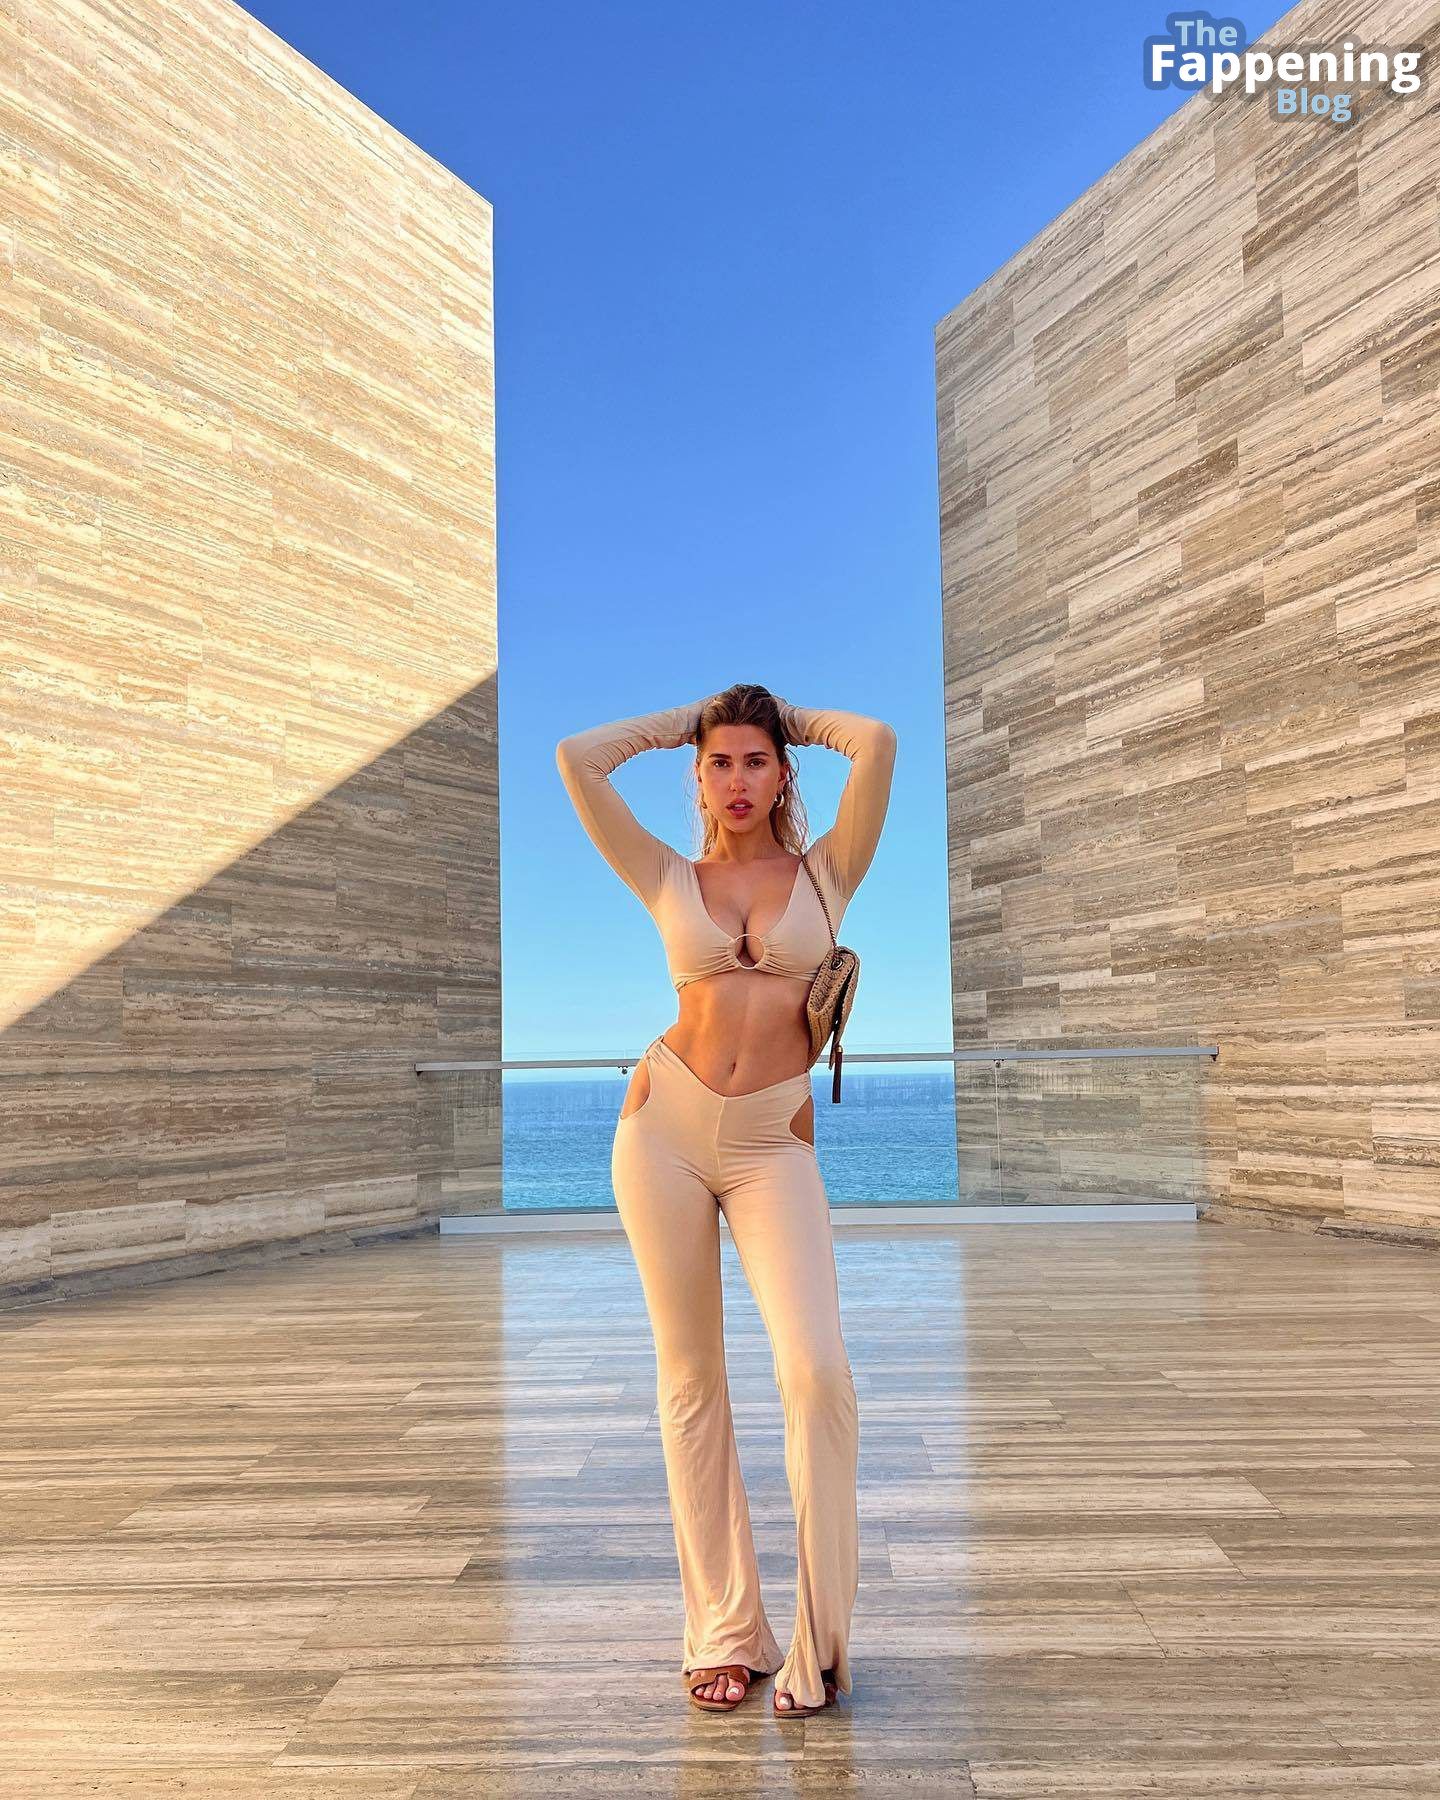 Stunning Kara Del Toro Displays Her Sexy Figure in a New Instagram Shoot (9 Photos)